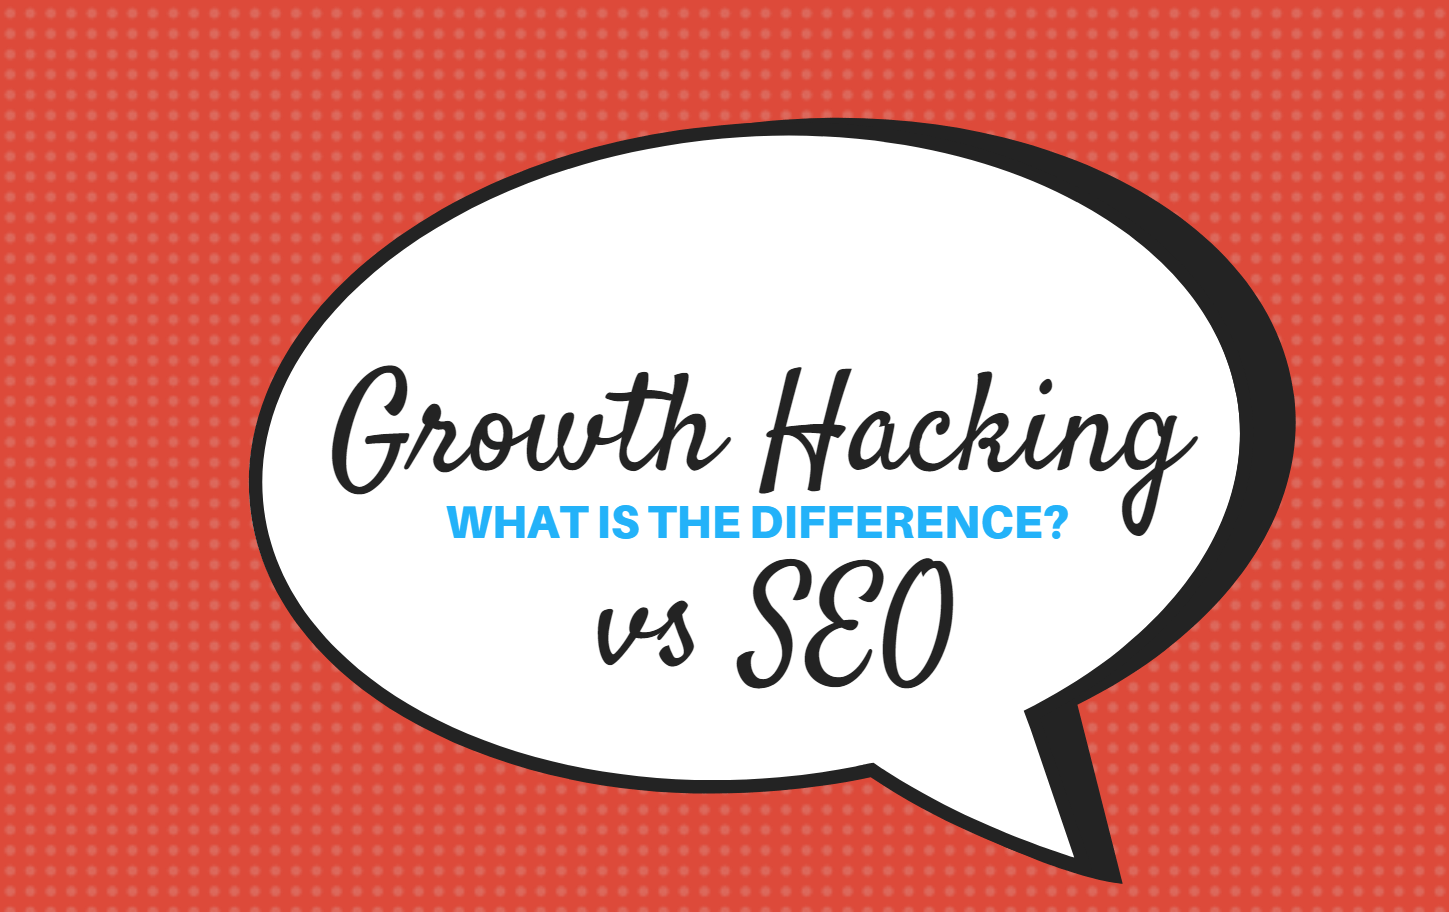 Growth Hacking Vs Seo